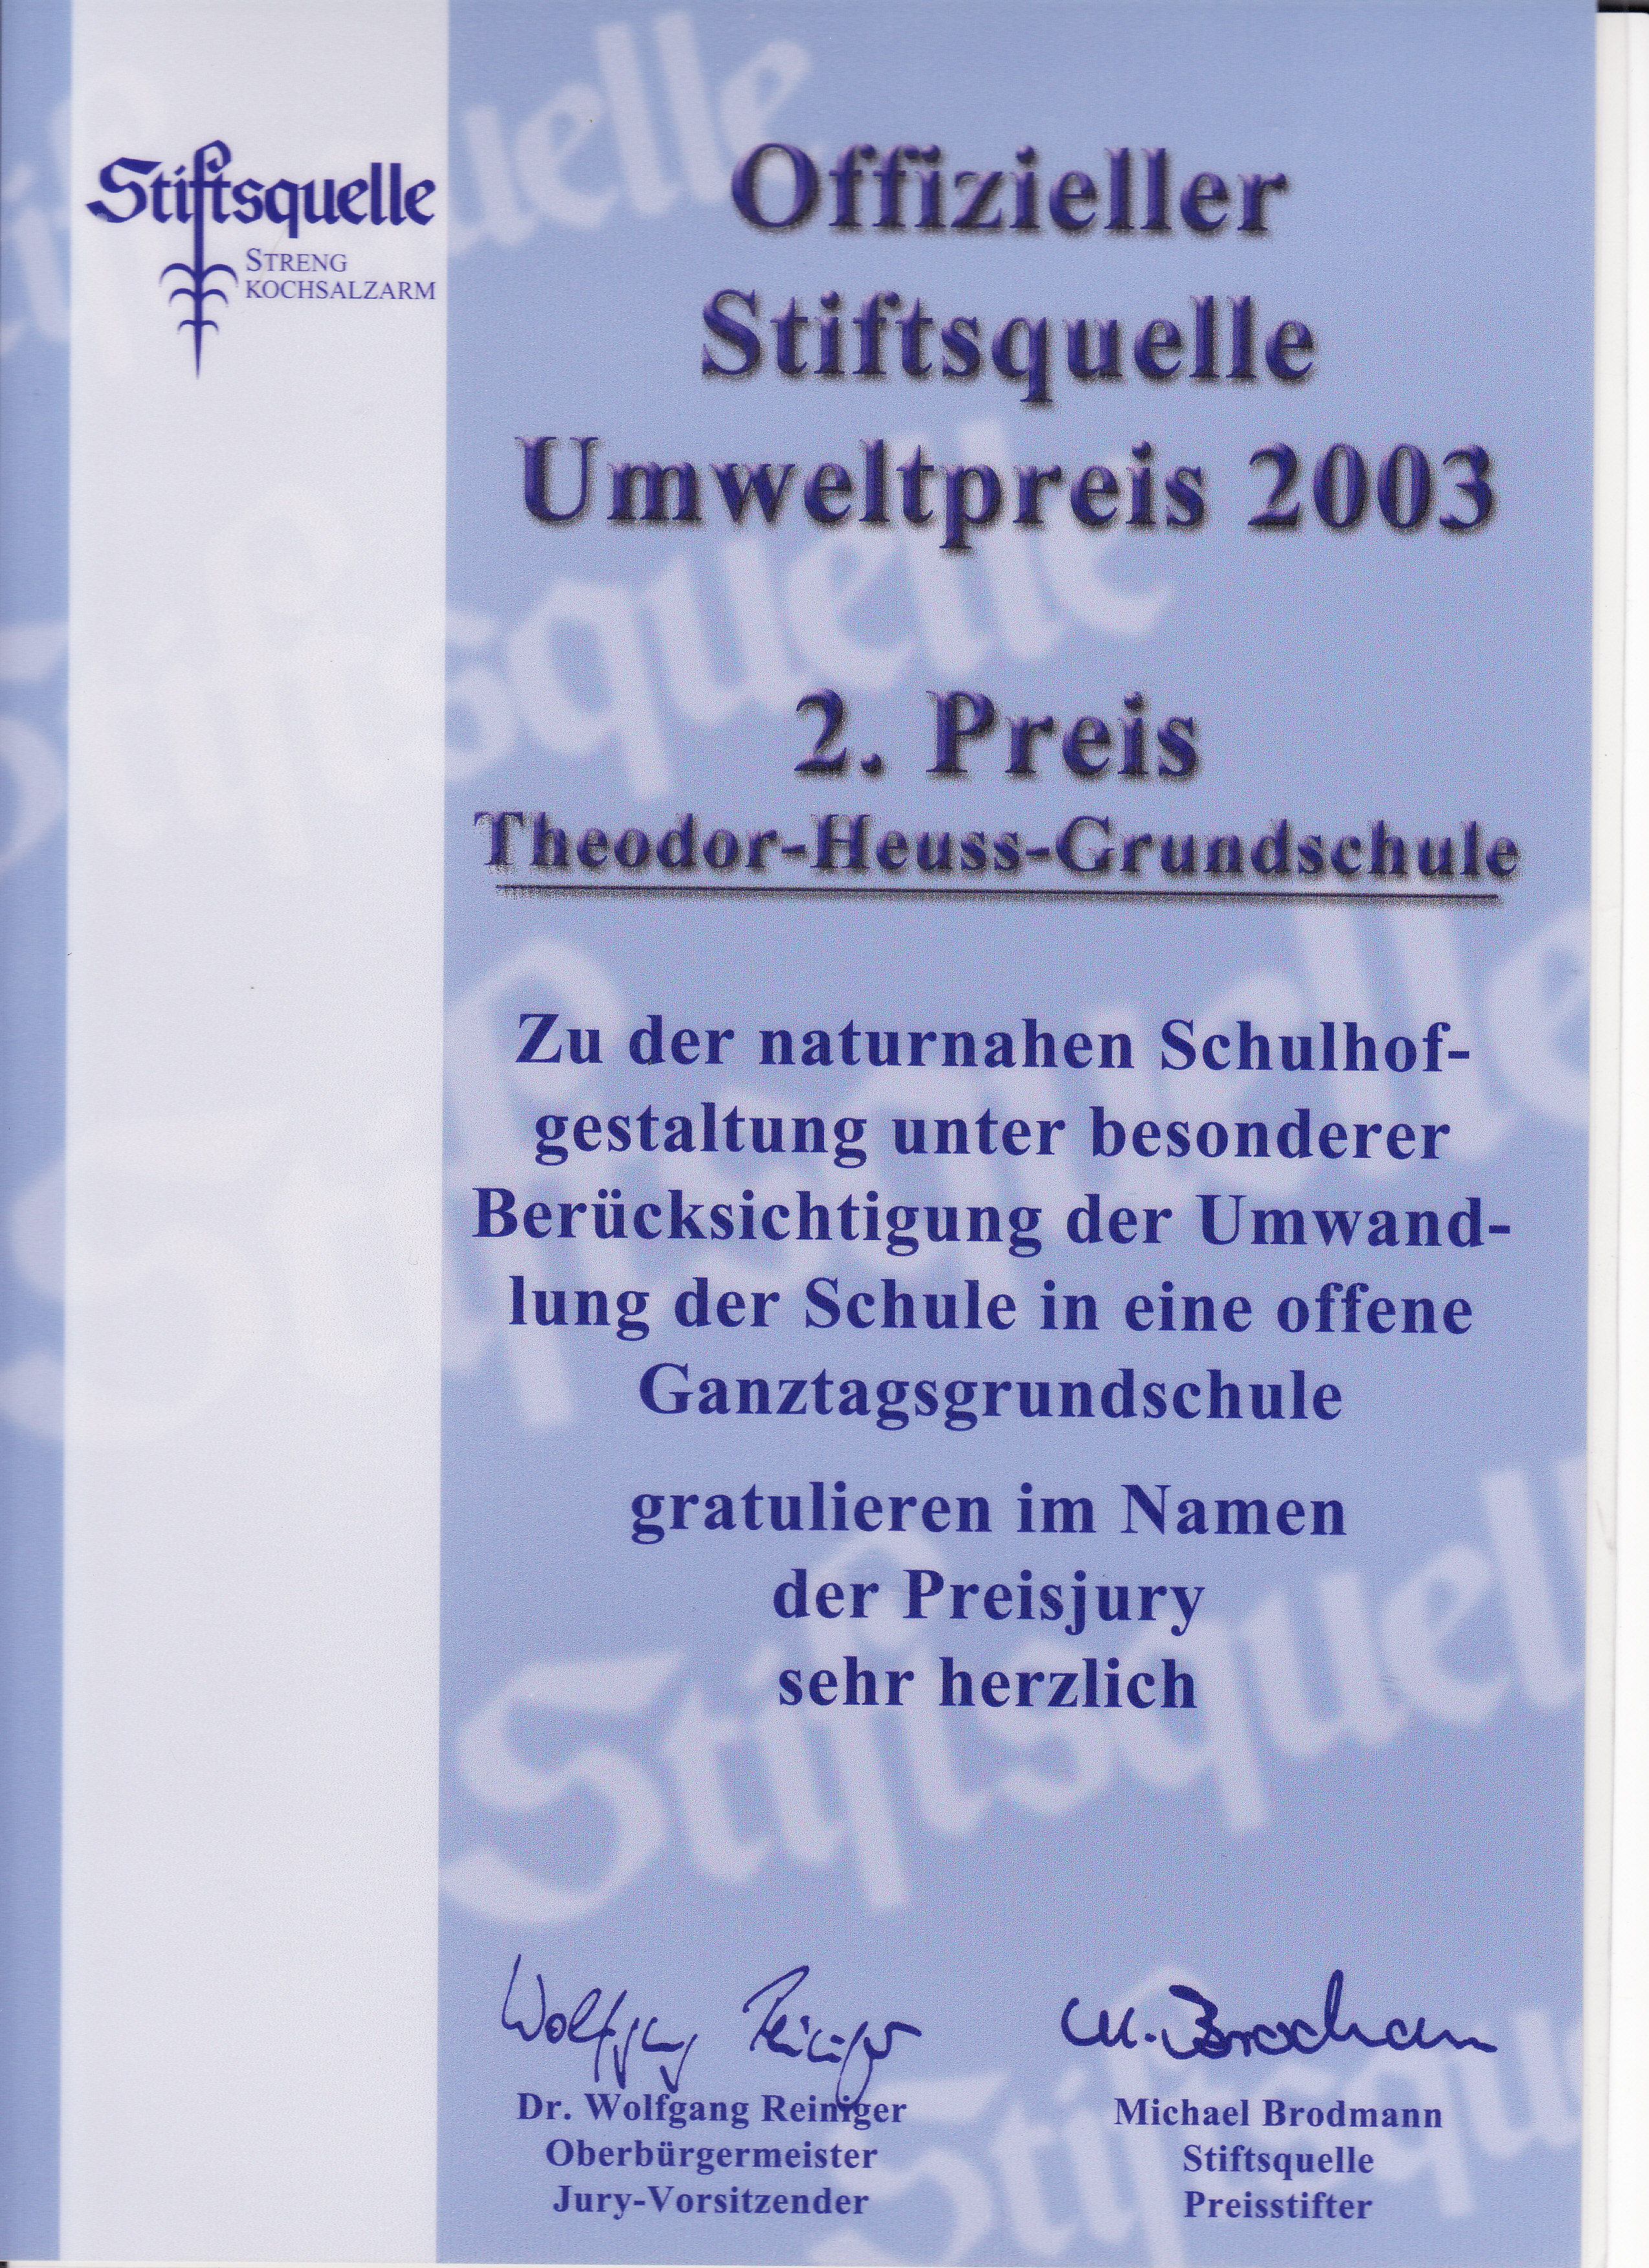 Urkunde_Umweltpreis_2003